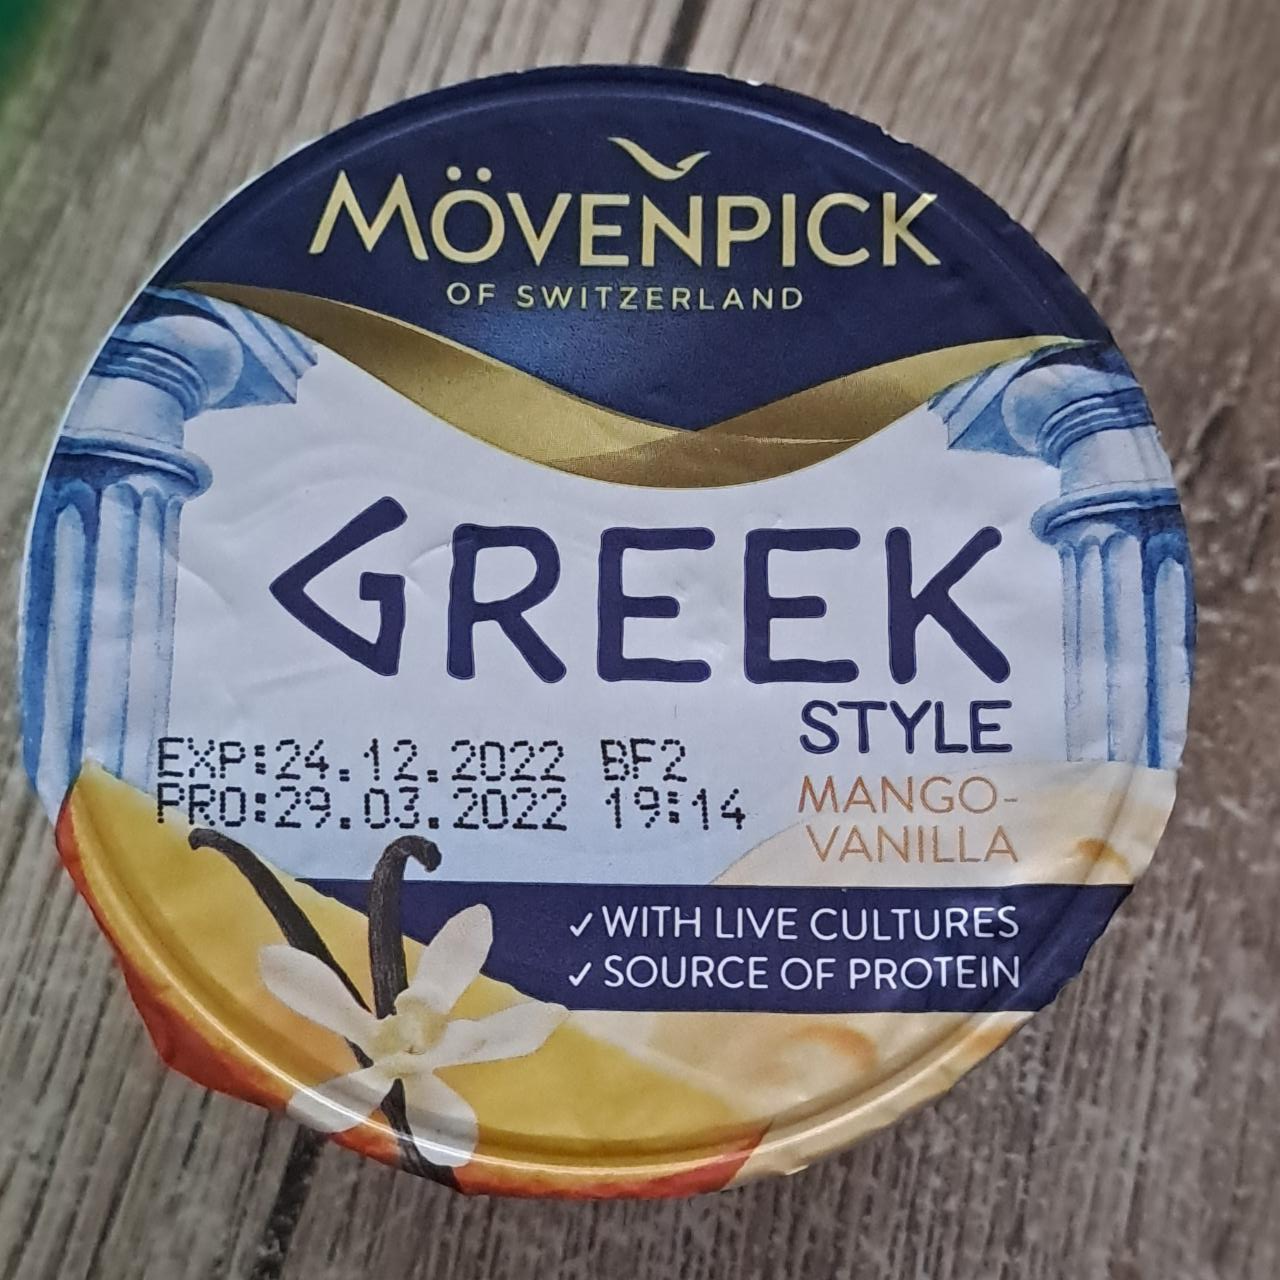 Fotografie - Mango-Vanilla Greek Style Yogurt Mövenpick